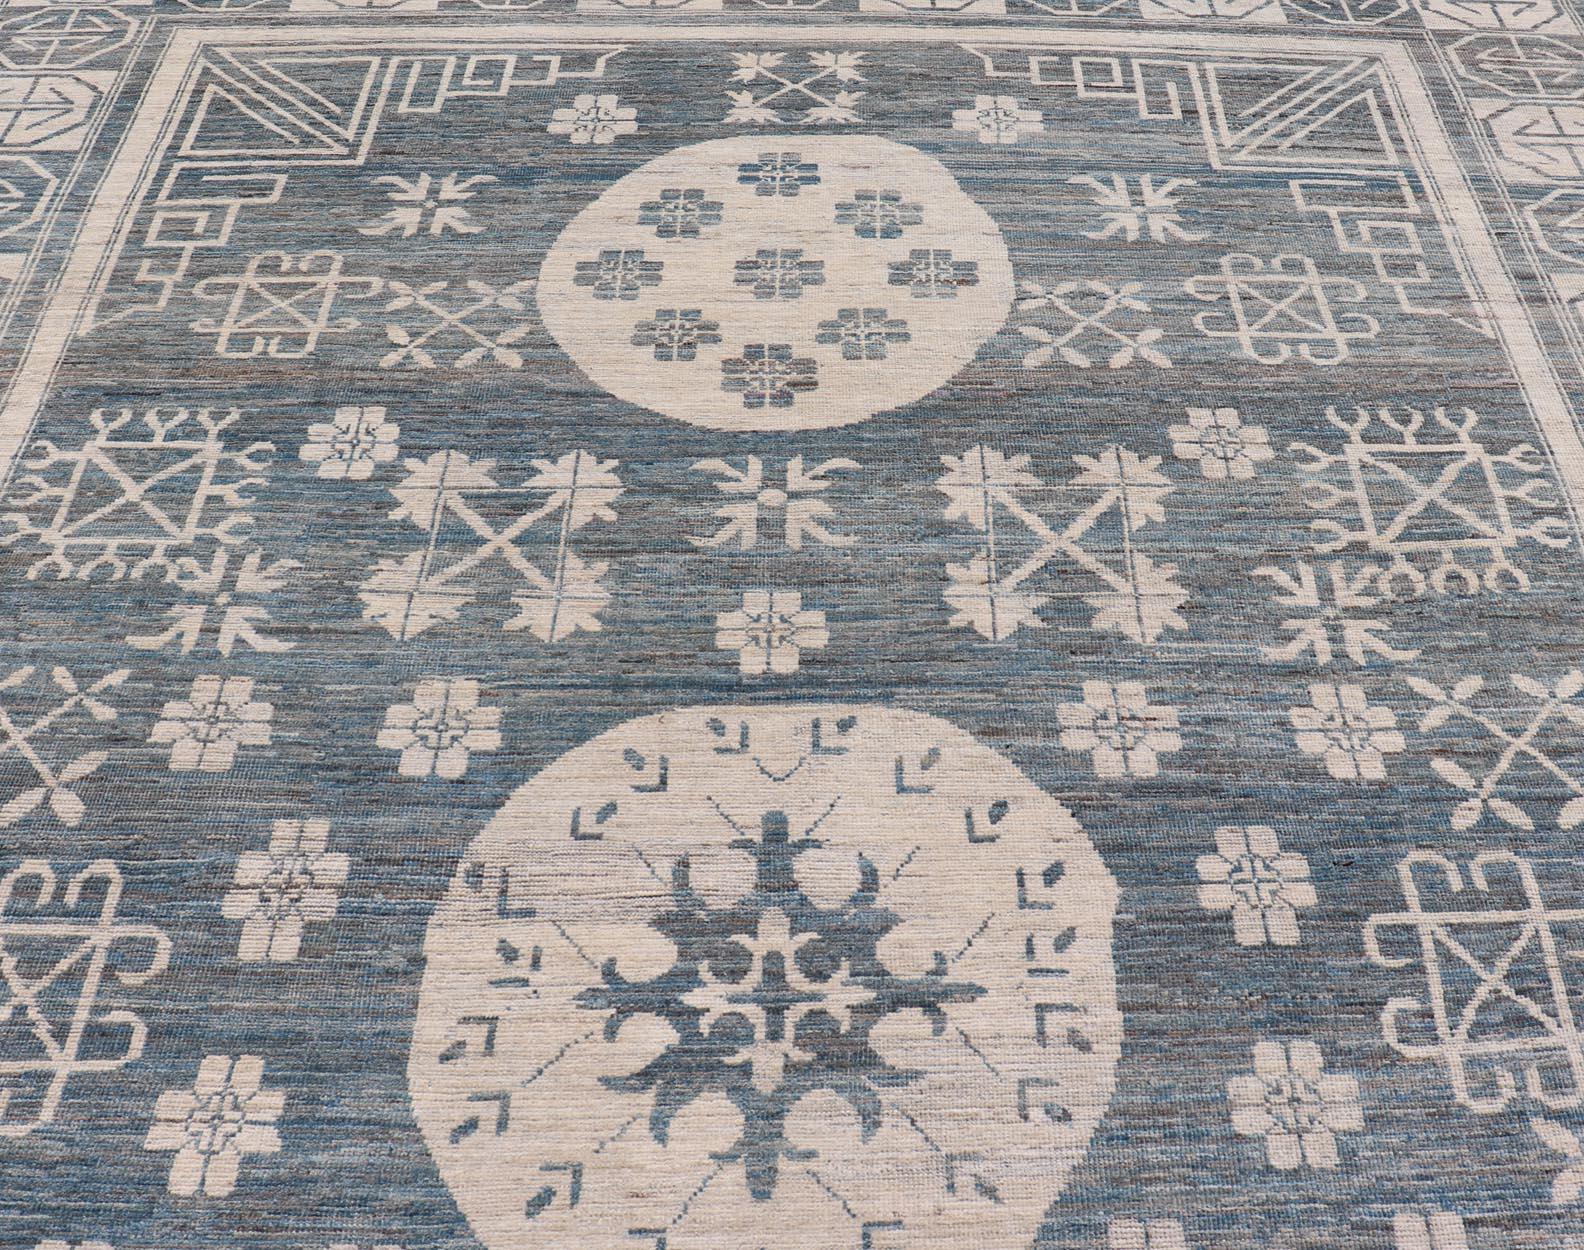 Modern Khotan long rug with circular medallions in shades of steel blue & off white. Keivan Woven Arts rug AFG-58337, Keivan Woven Arts / country of origin / type: Afghanistan / Khotan

Measures: 10'6 x 16'3 

This modern Khotan made rug